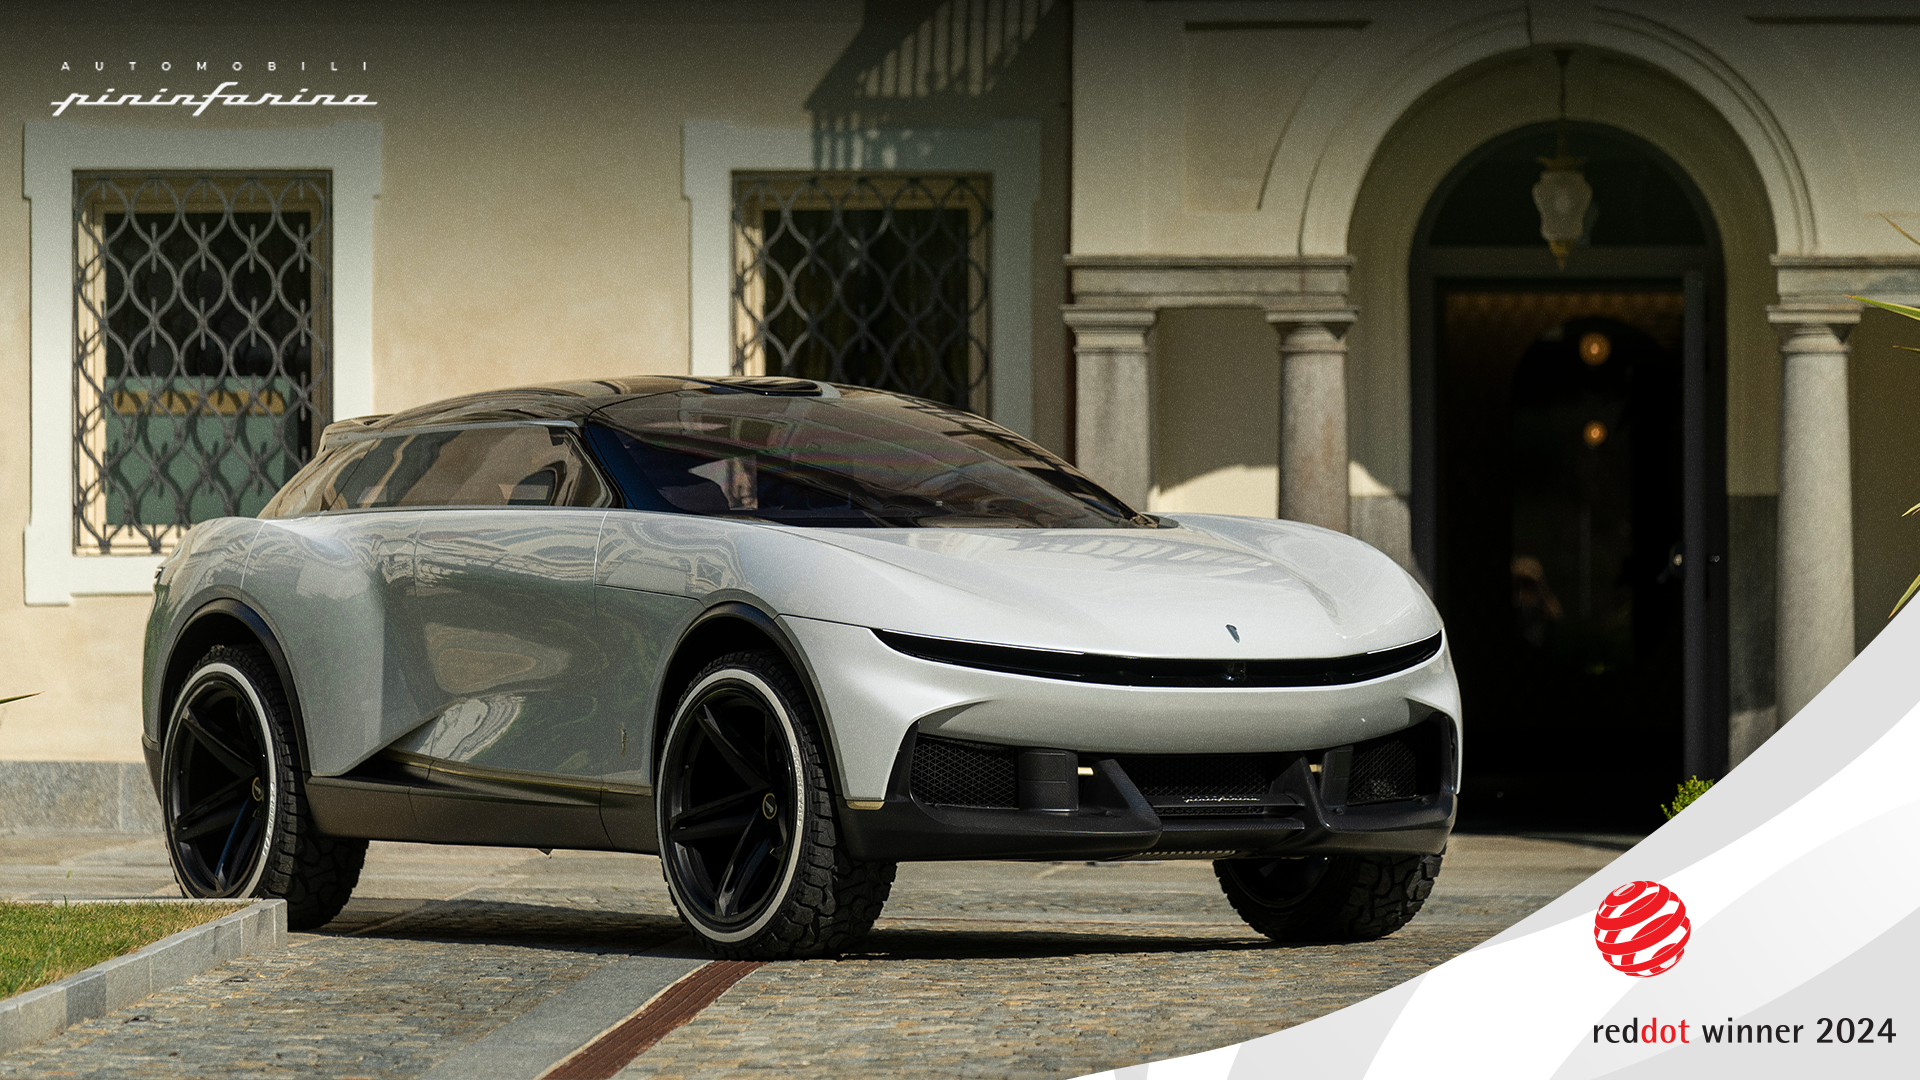 Automobili_Pininfarina_PURA_Vision_Wins_Red_Dot_Award_Design_Concept_4.png